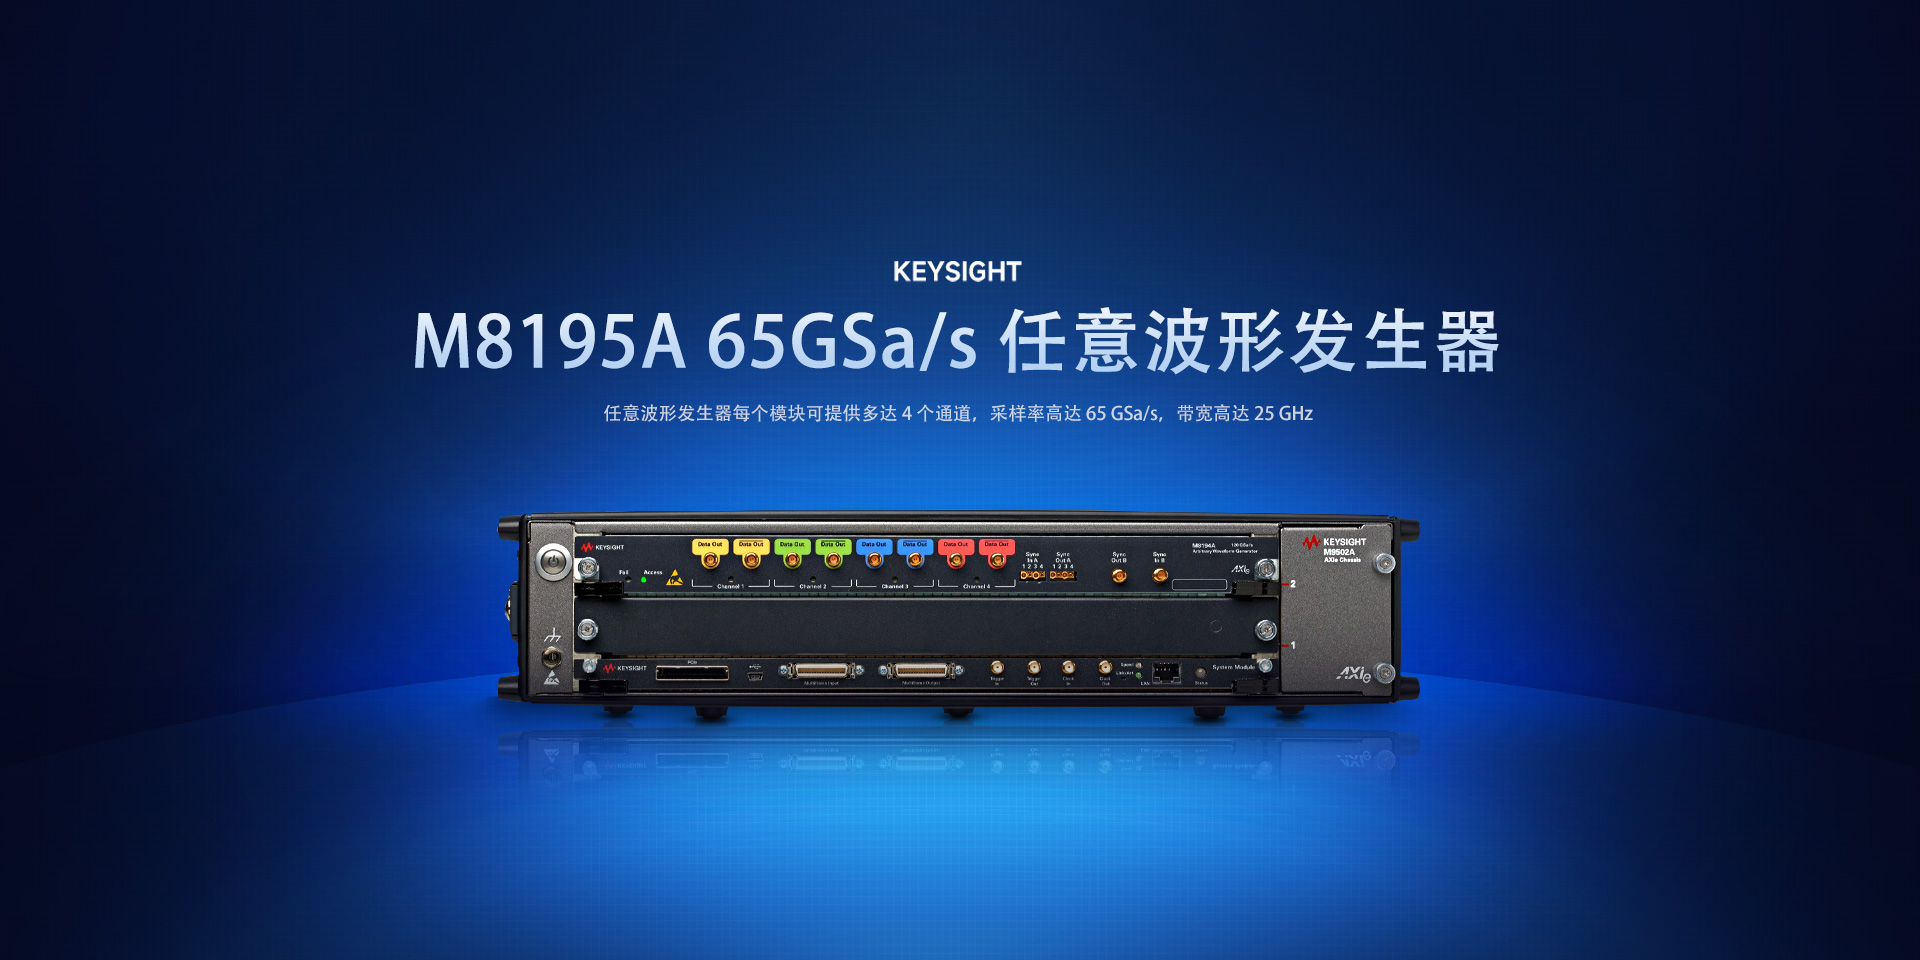 Keysight M8195A 任意波形发生器（AWG）在一个单插槽 AXIe 模块上同时提供多达 4 个输出通道，采样率高达 65 GSa/s，带宽高达 25 GHz，垂直分辨率为 8 位。